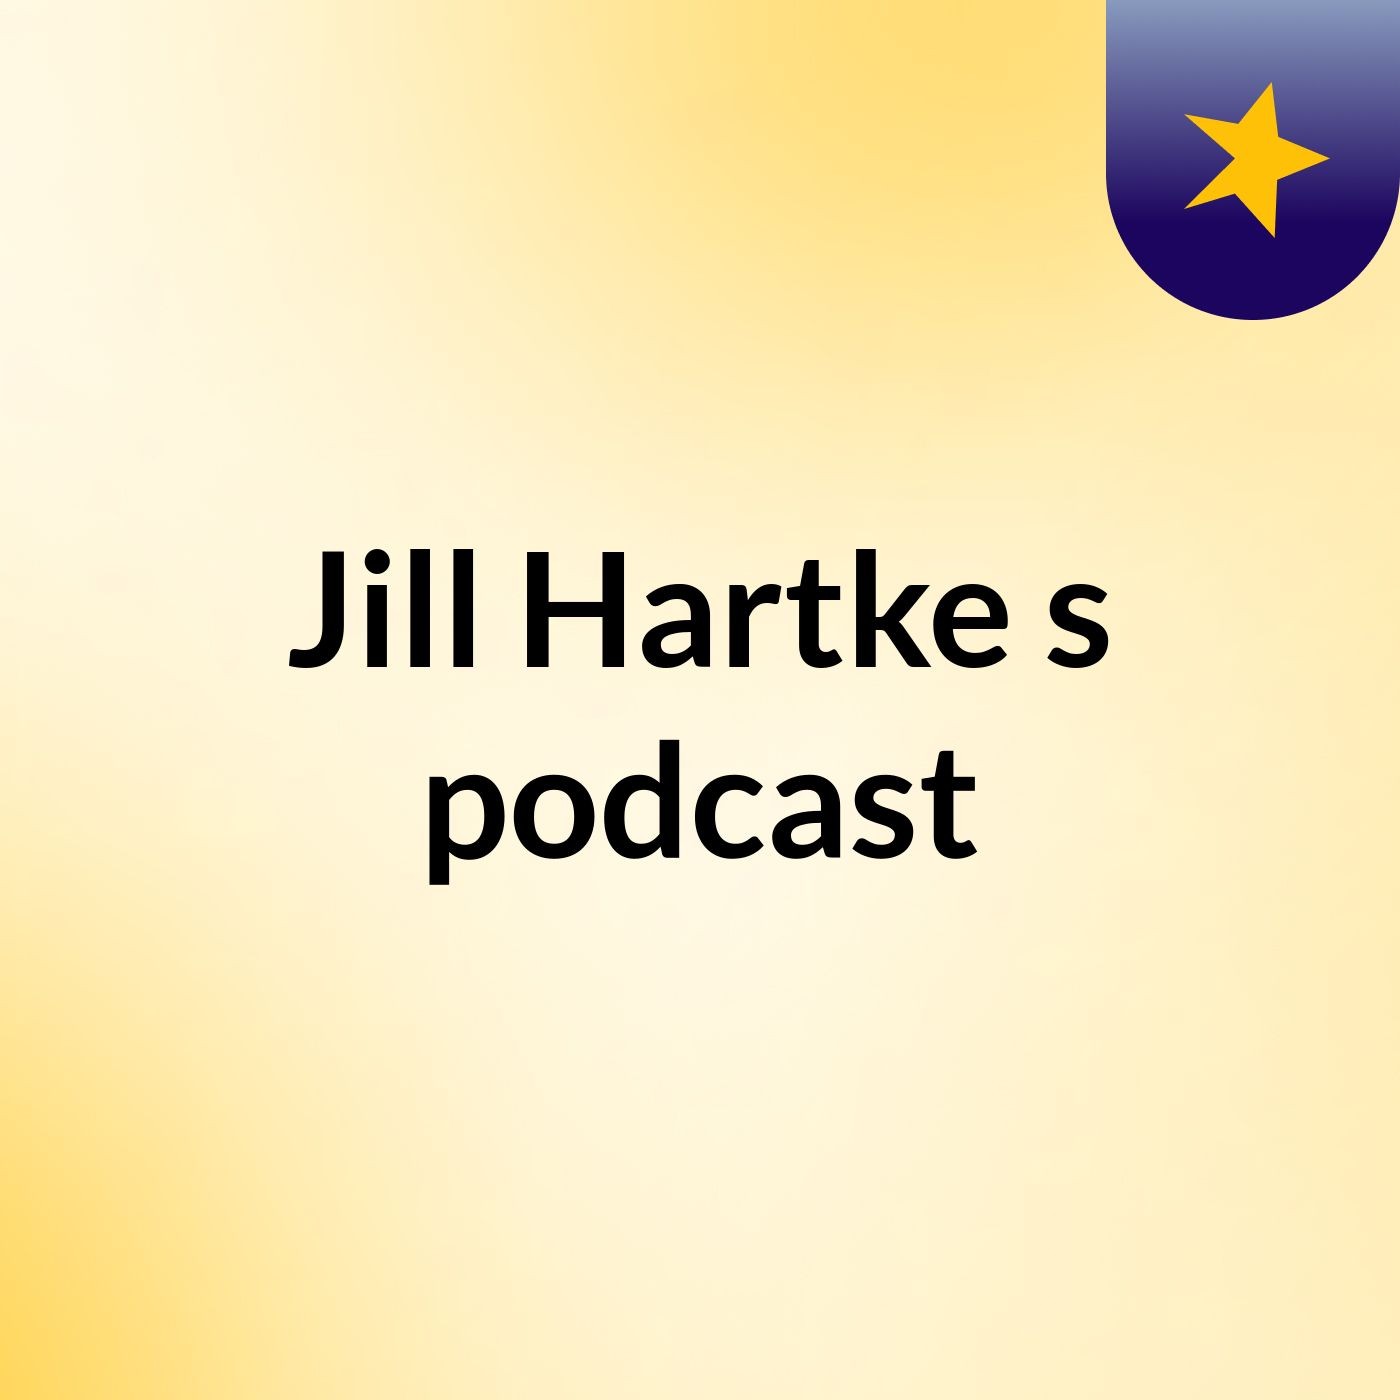 Jill Hartke's podcast